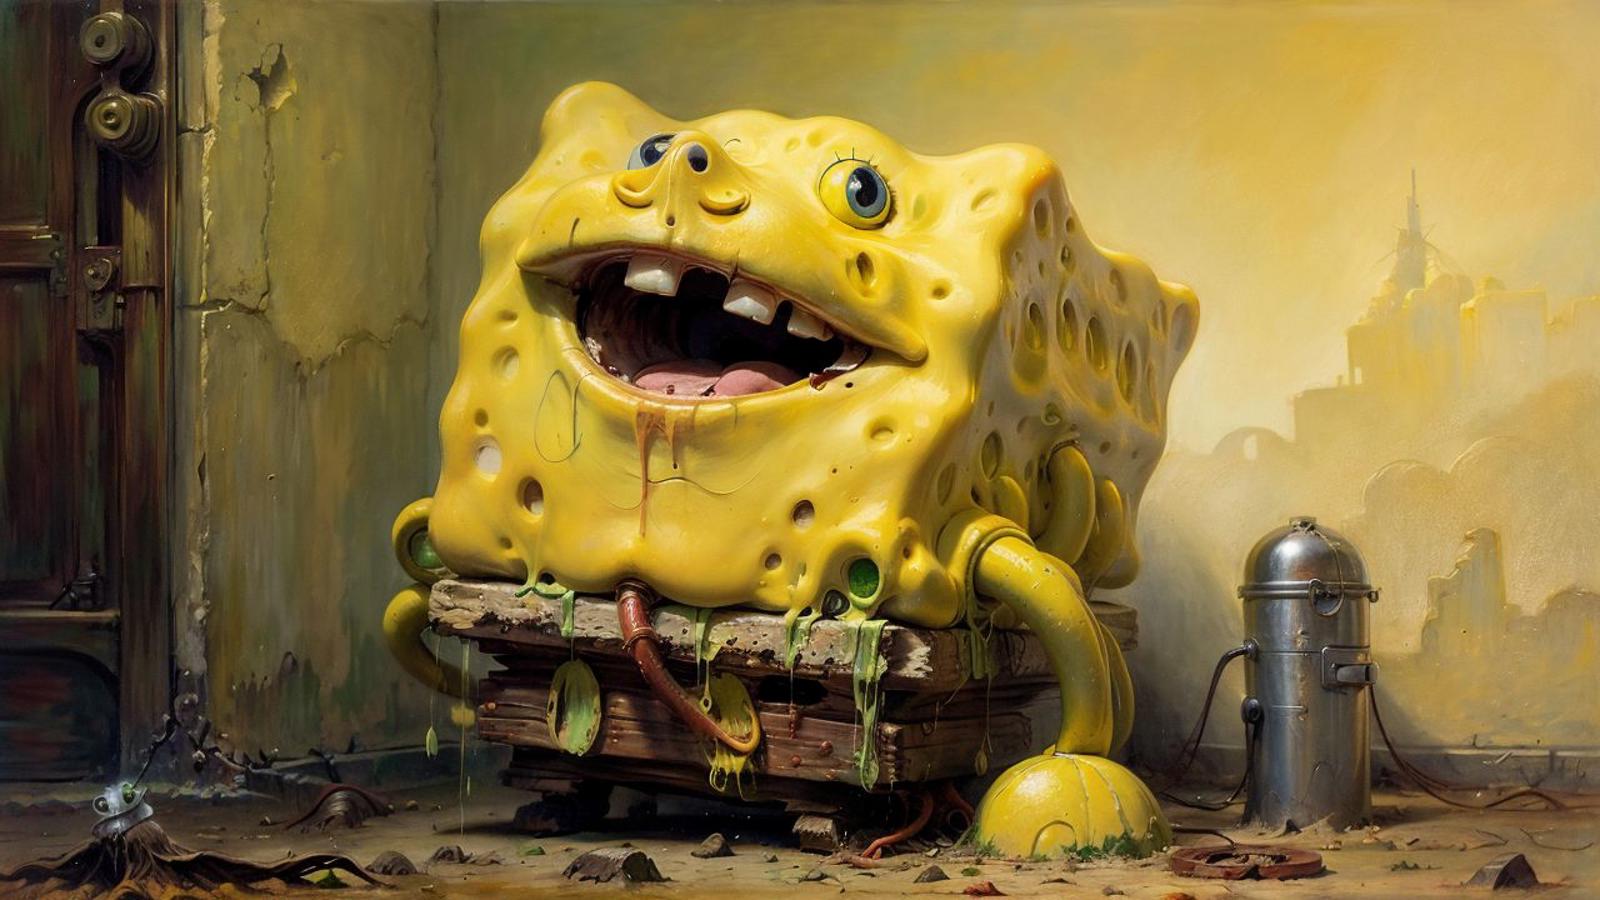 Edob SpongeBob SquarePants image by Monster